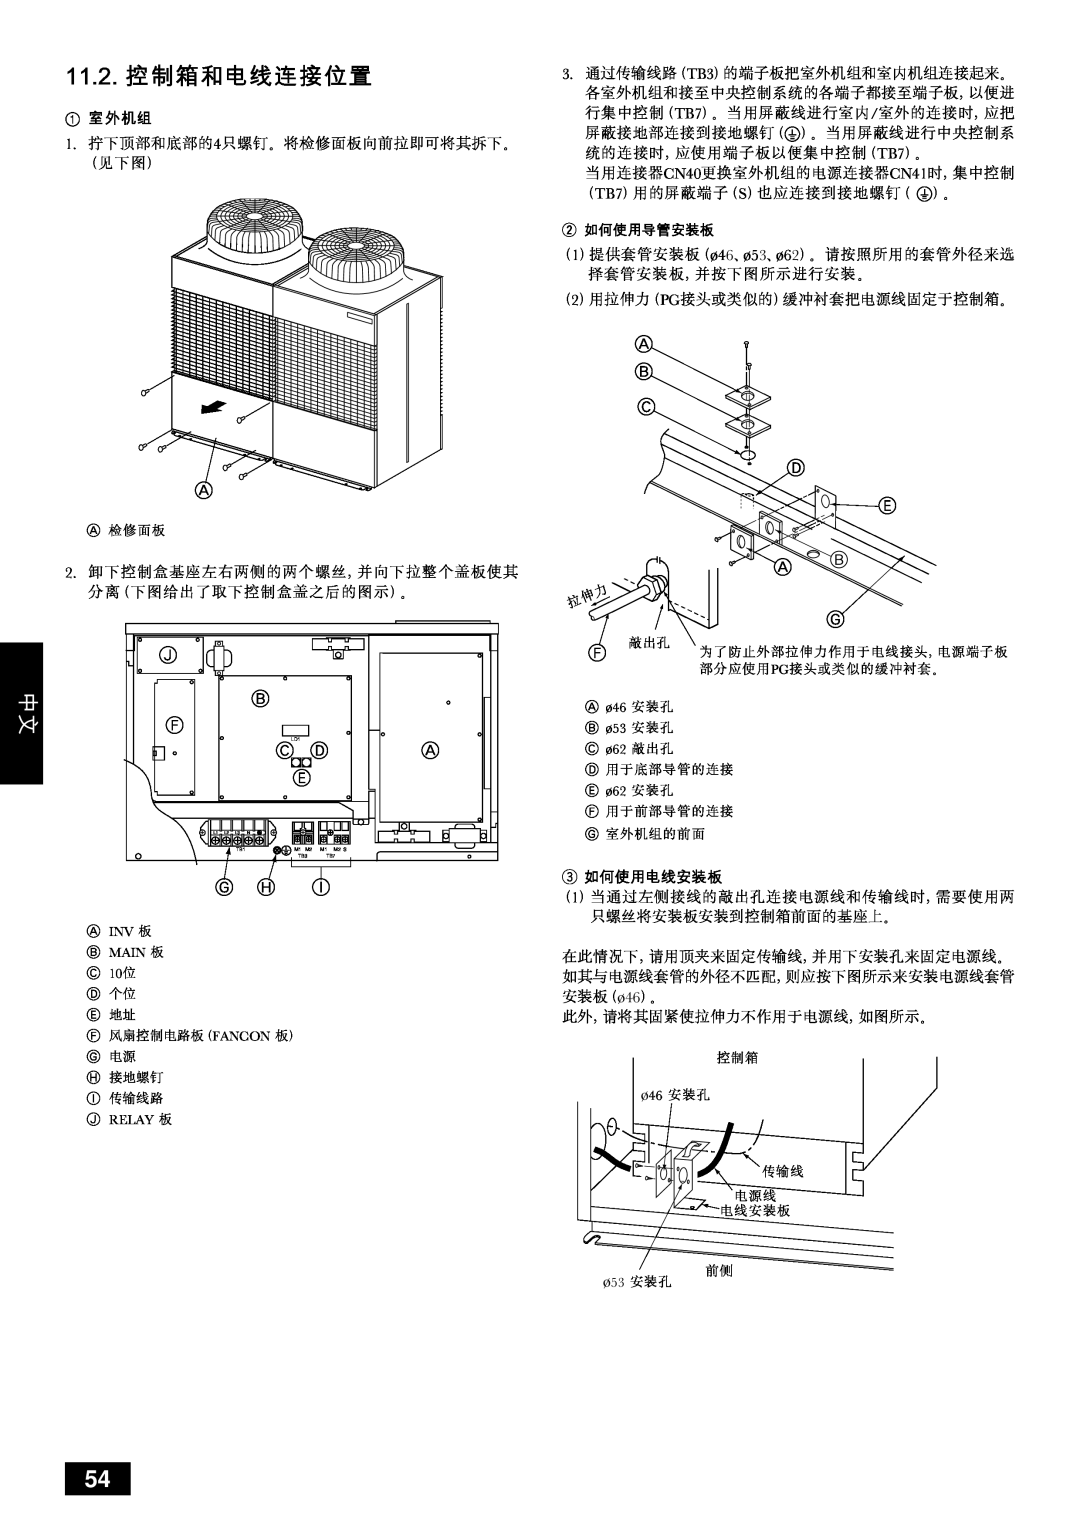 Mitsubishi Electronics PUHY-YMC installation manual Nnkok=, J B F, C D A E, A B C D E A B G 